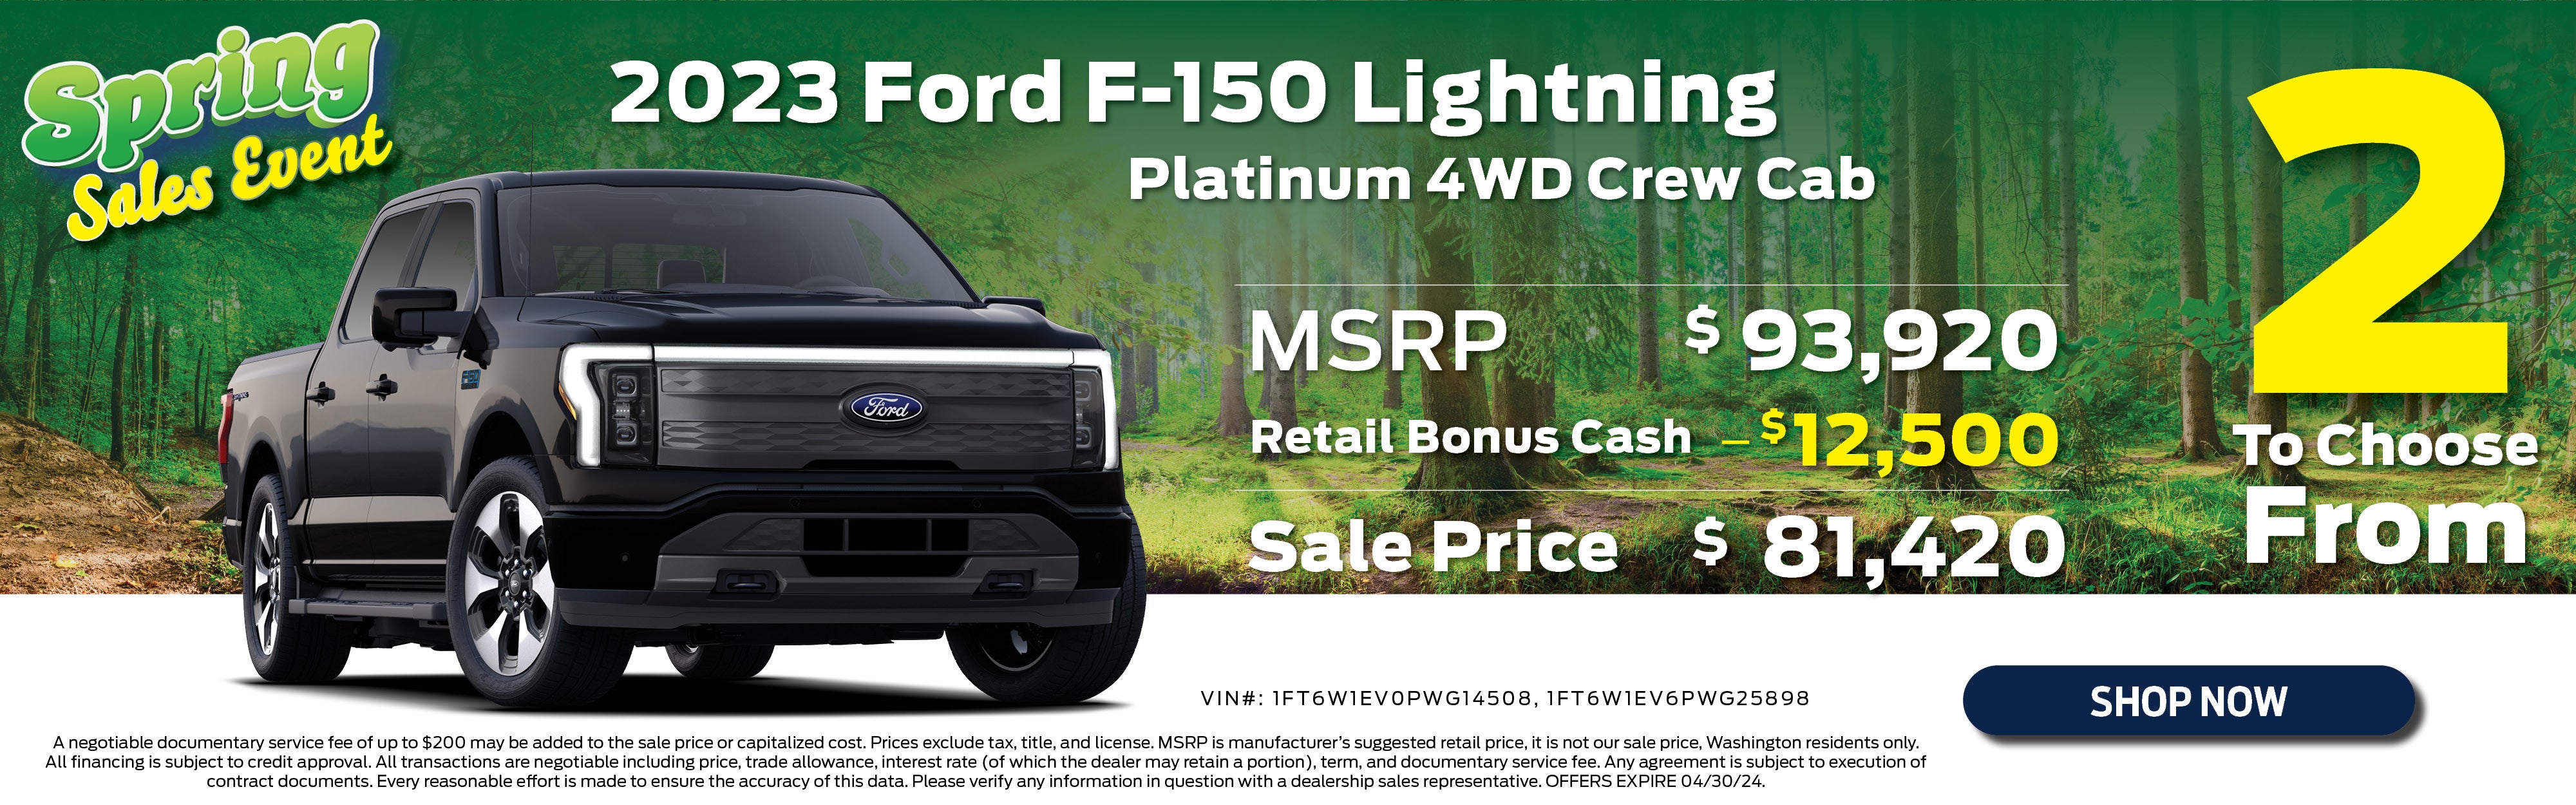 2023 Ford F-150 Lightning Platinum 4WD